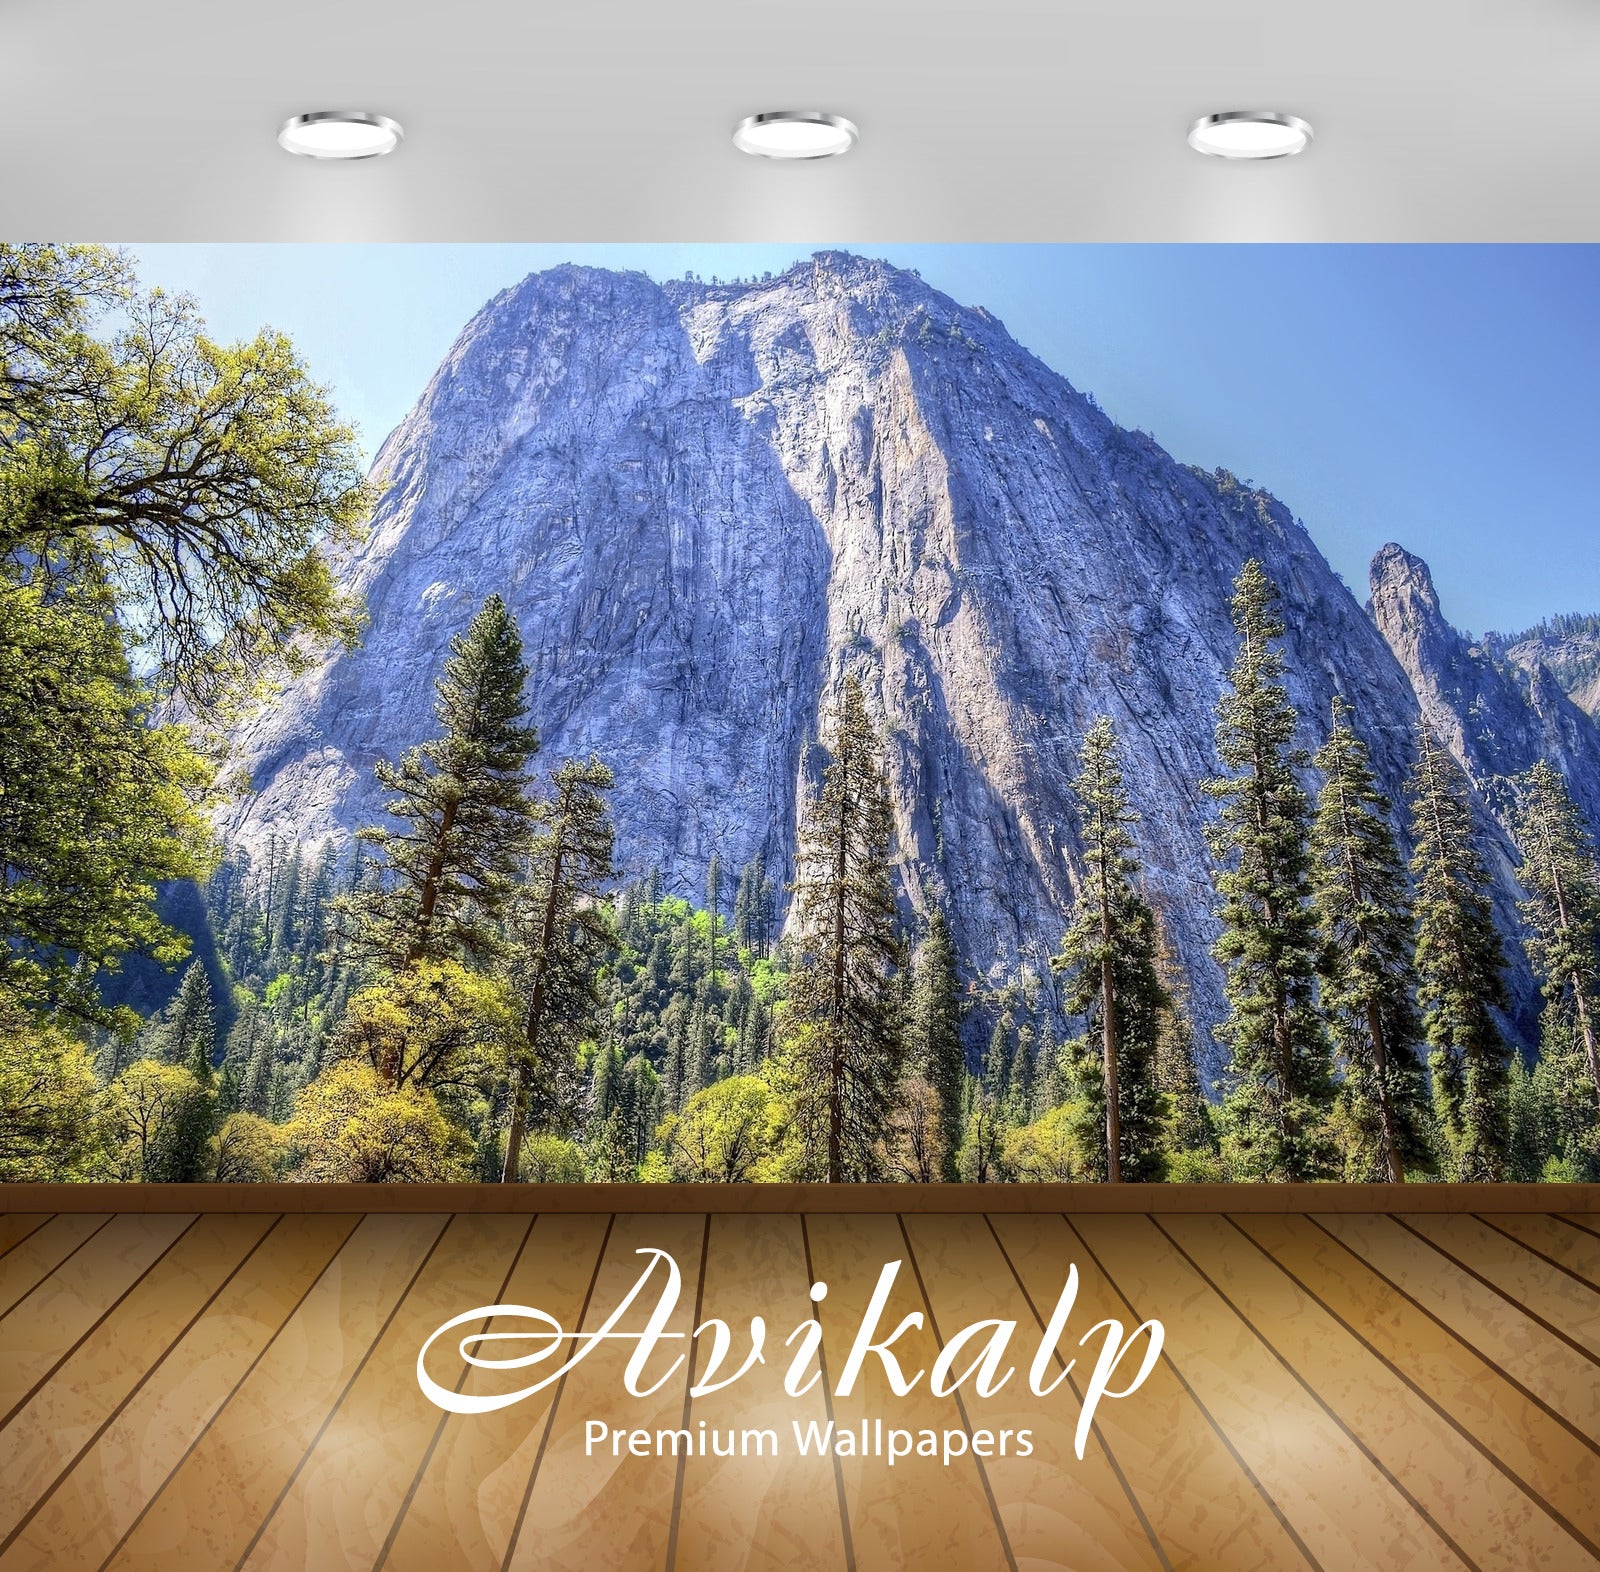 Avikalp Exclusive Awi6765 Yosemite National Park Nature Full HD Wallpapers for Living room, Hall, Ki